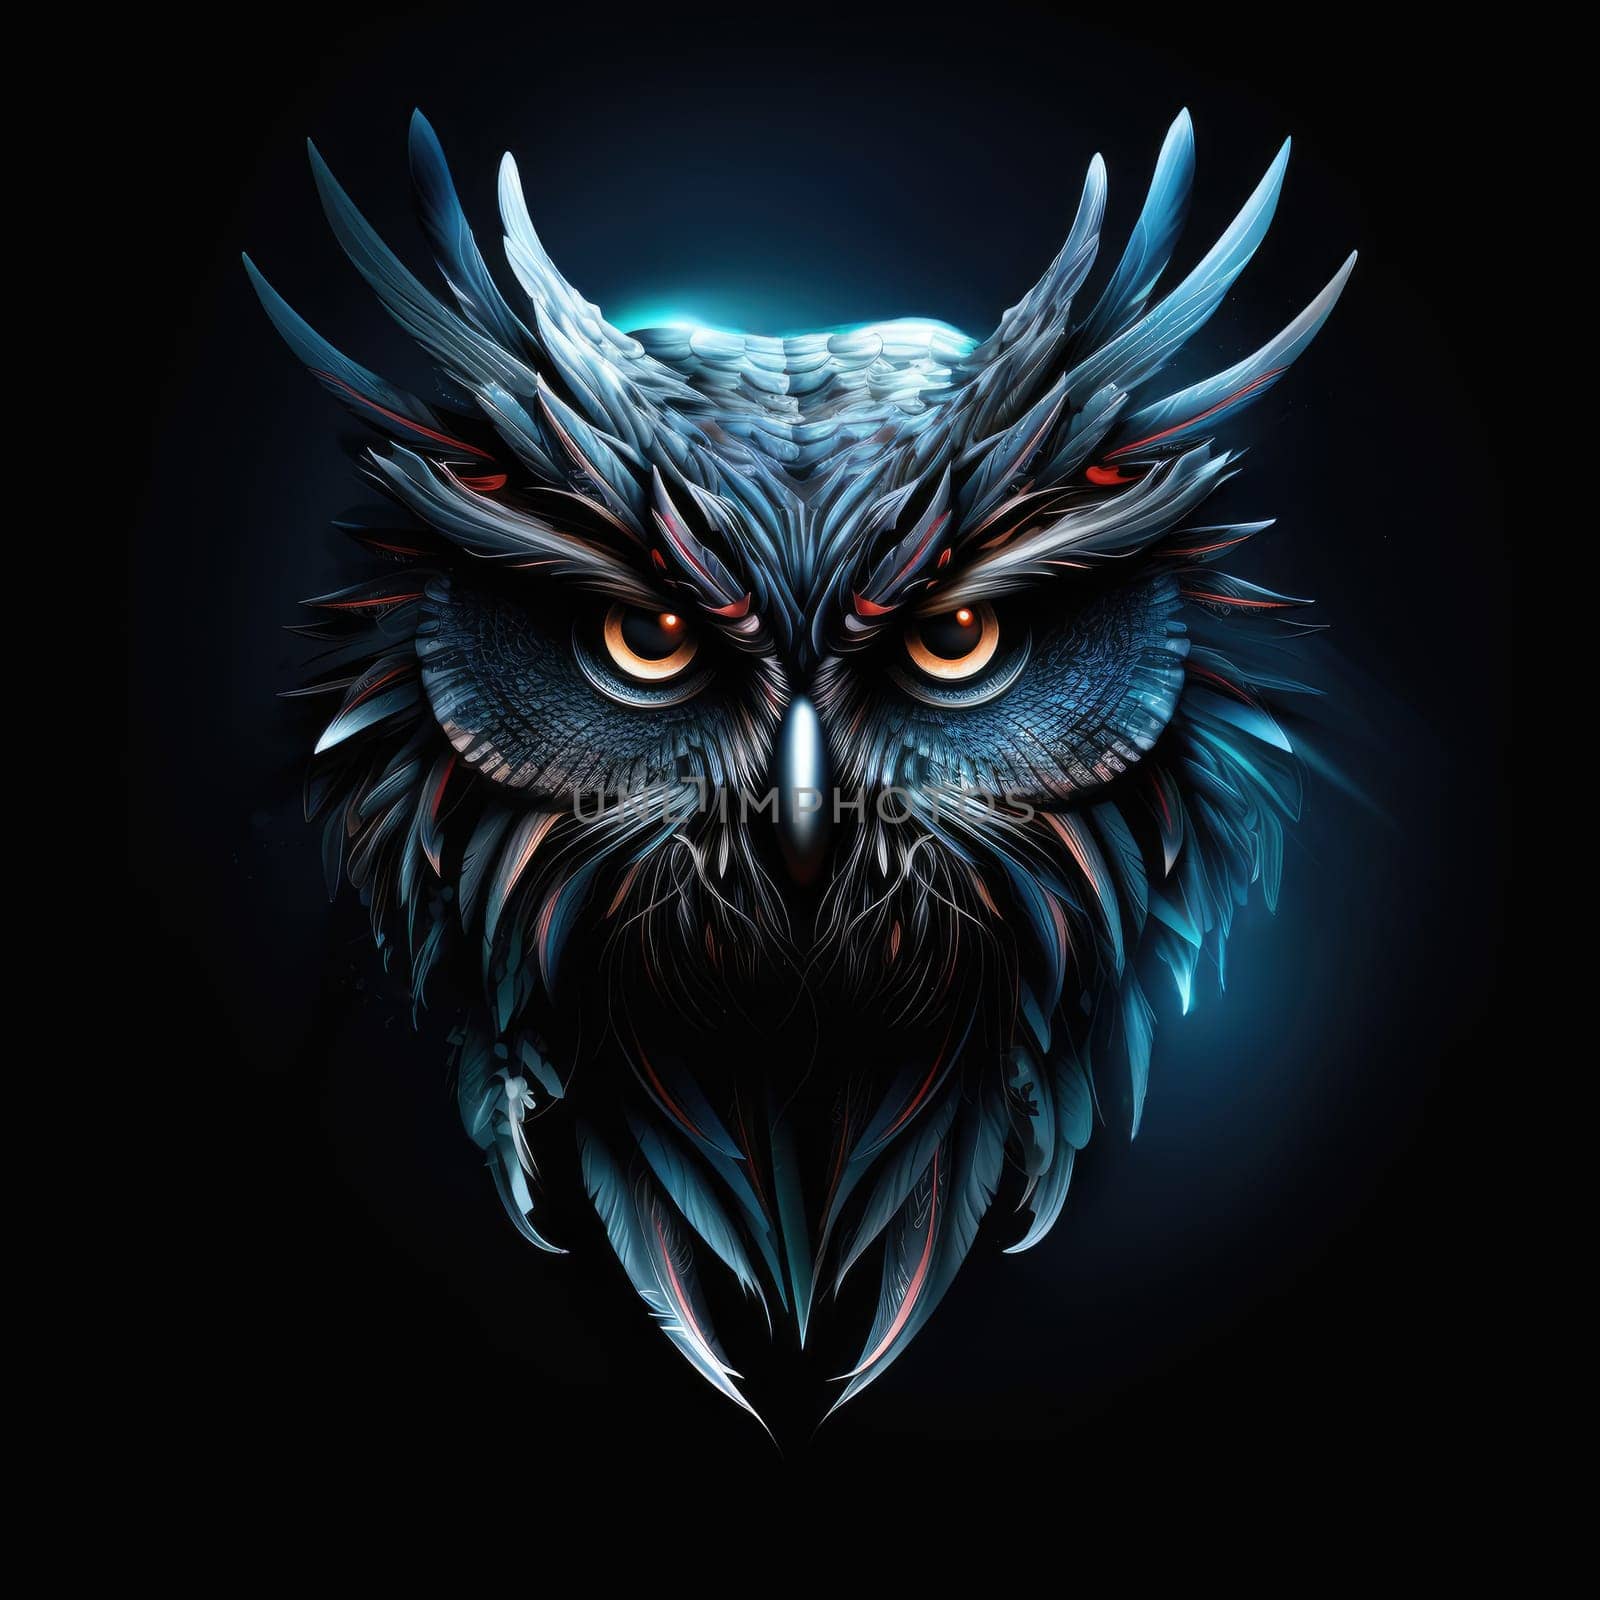 Wise owl glowing on a dark background by palinchak